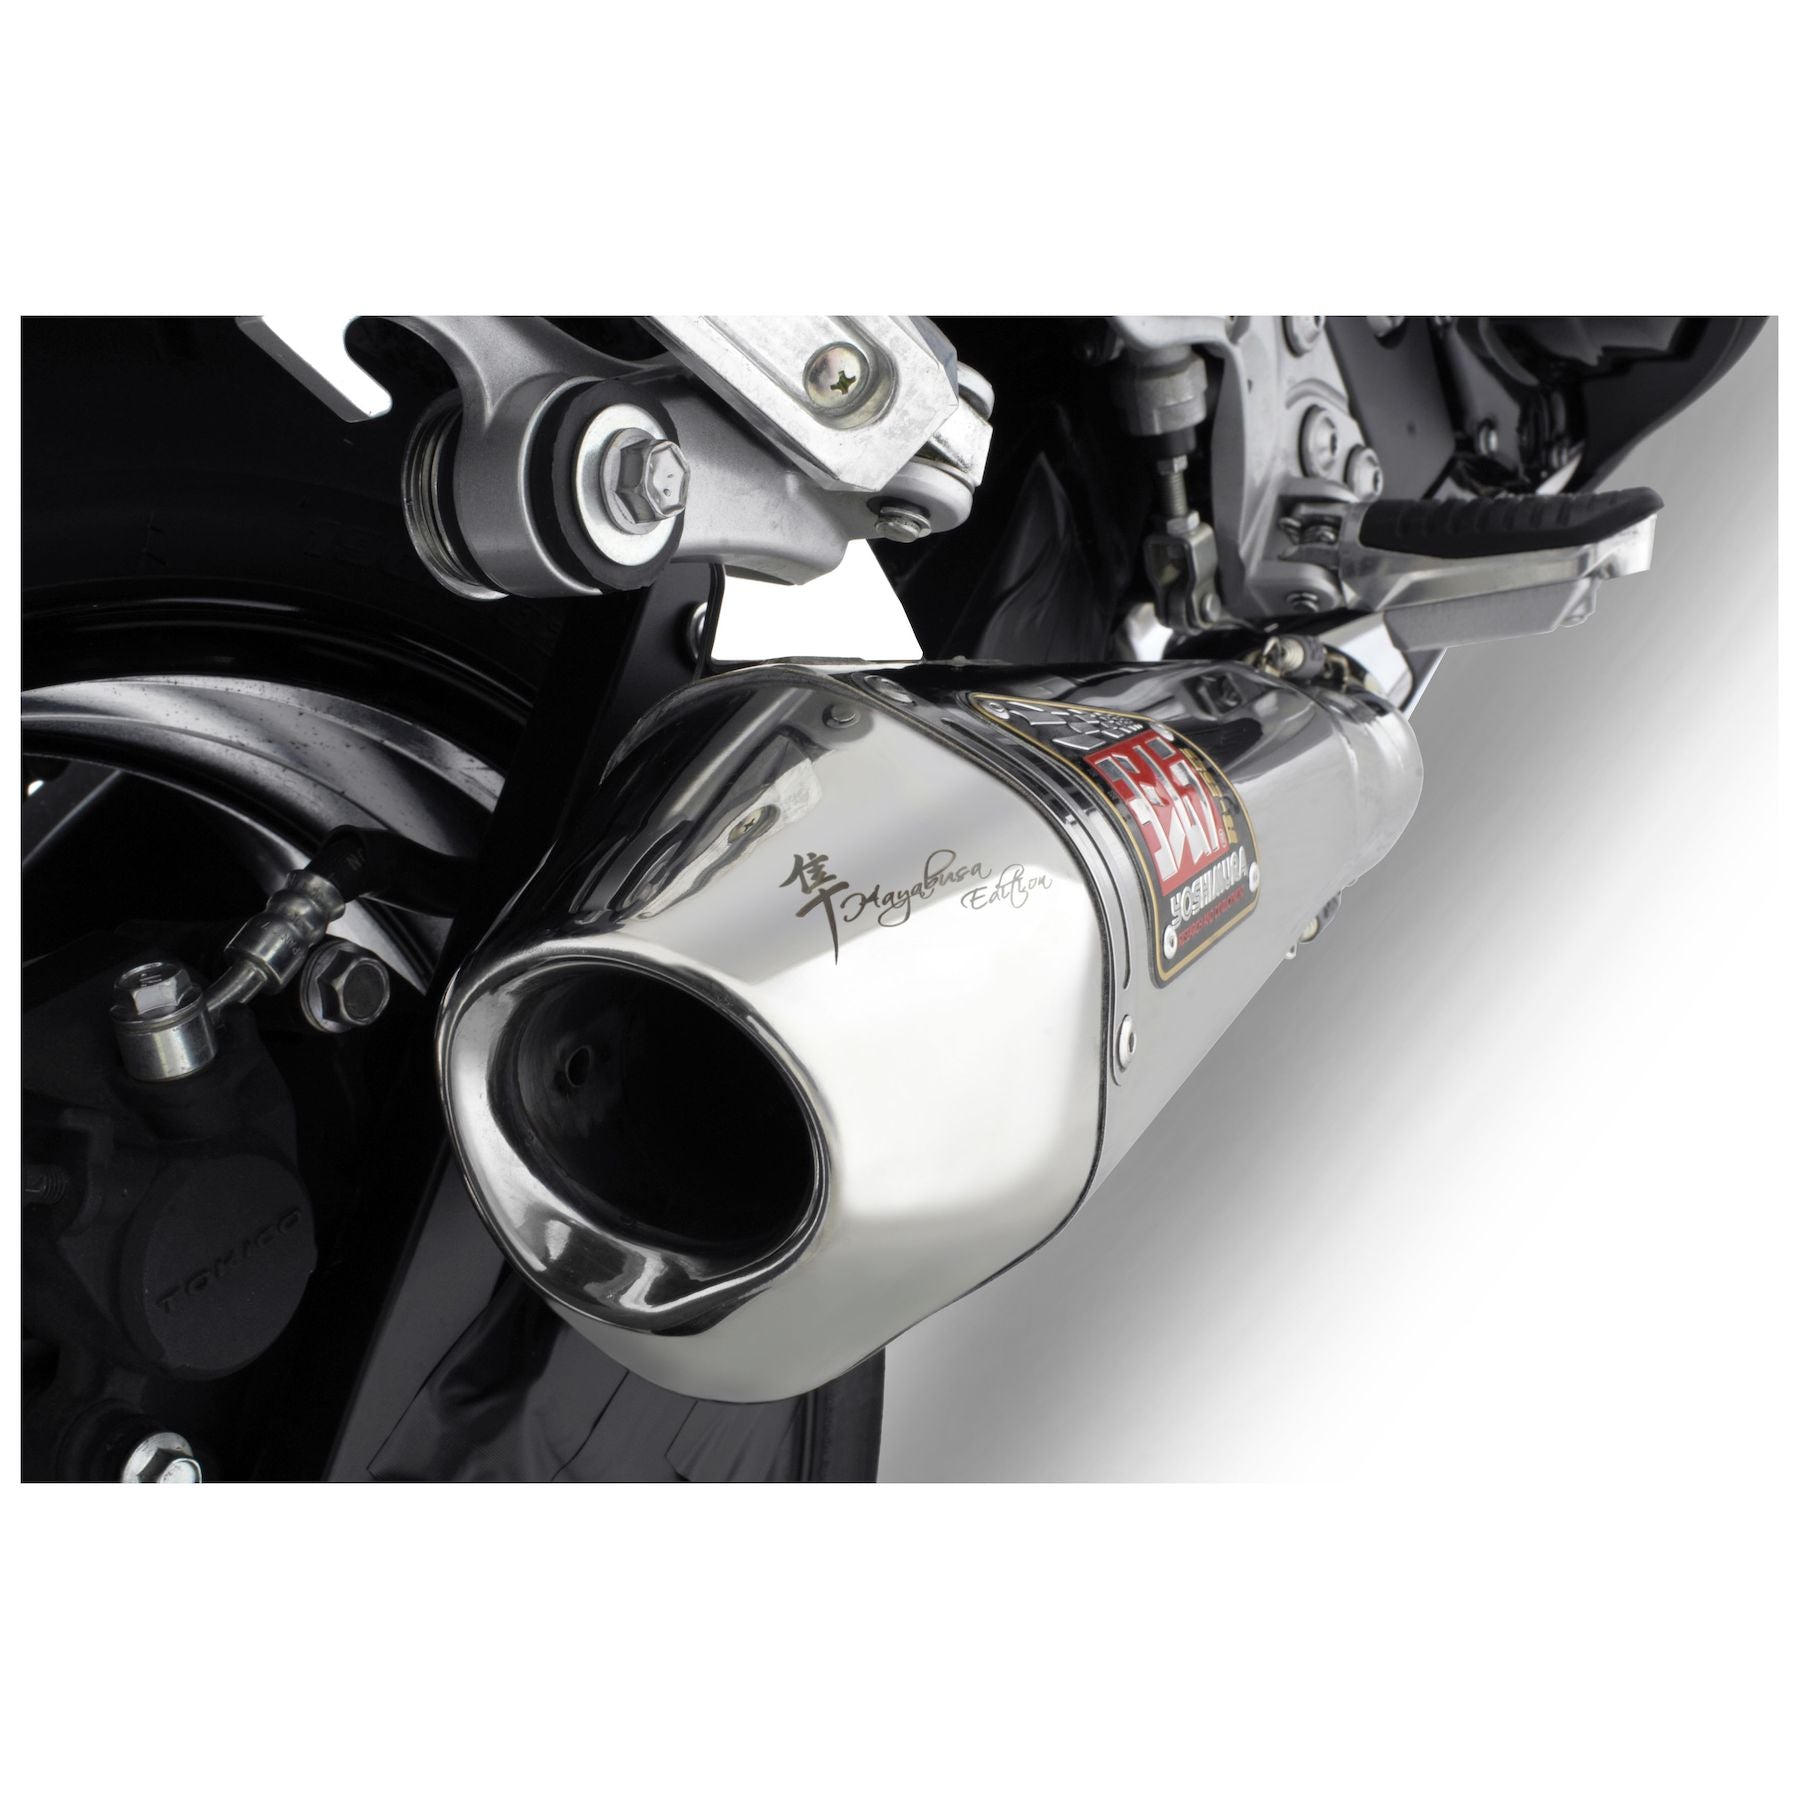 Buy Yoshimura R55 Race Full Exhaust System for Suzuki Hayabusa Online